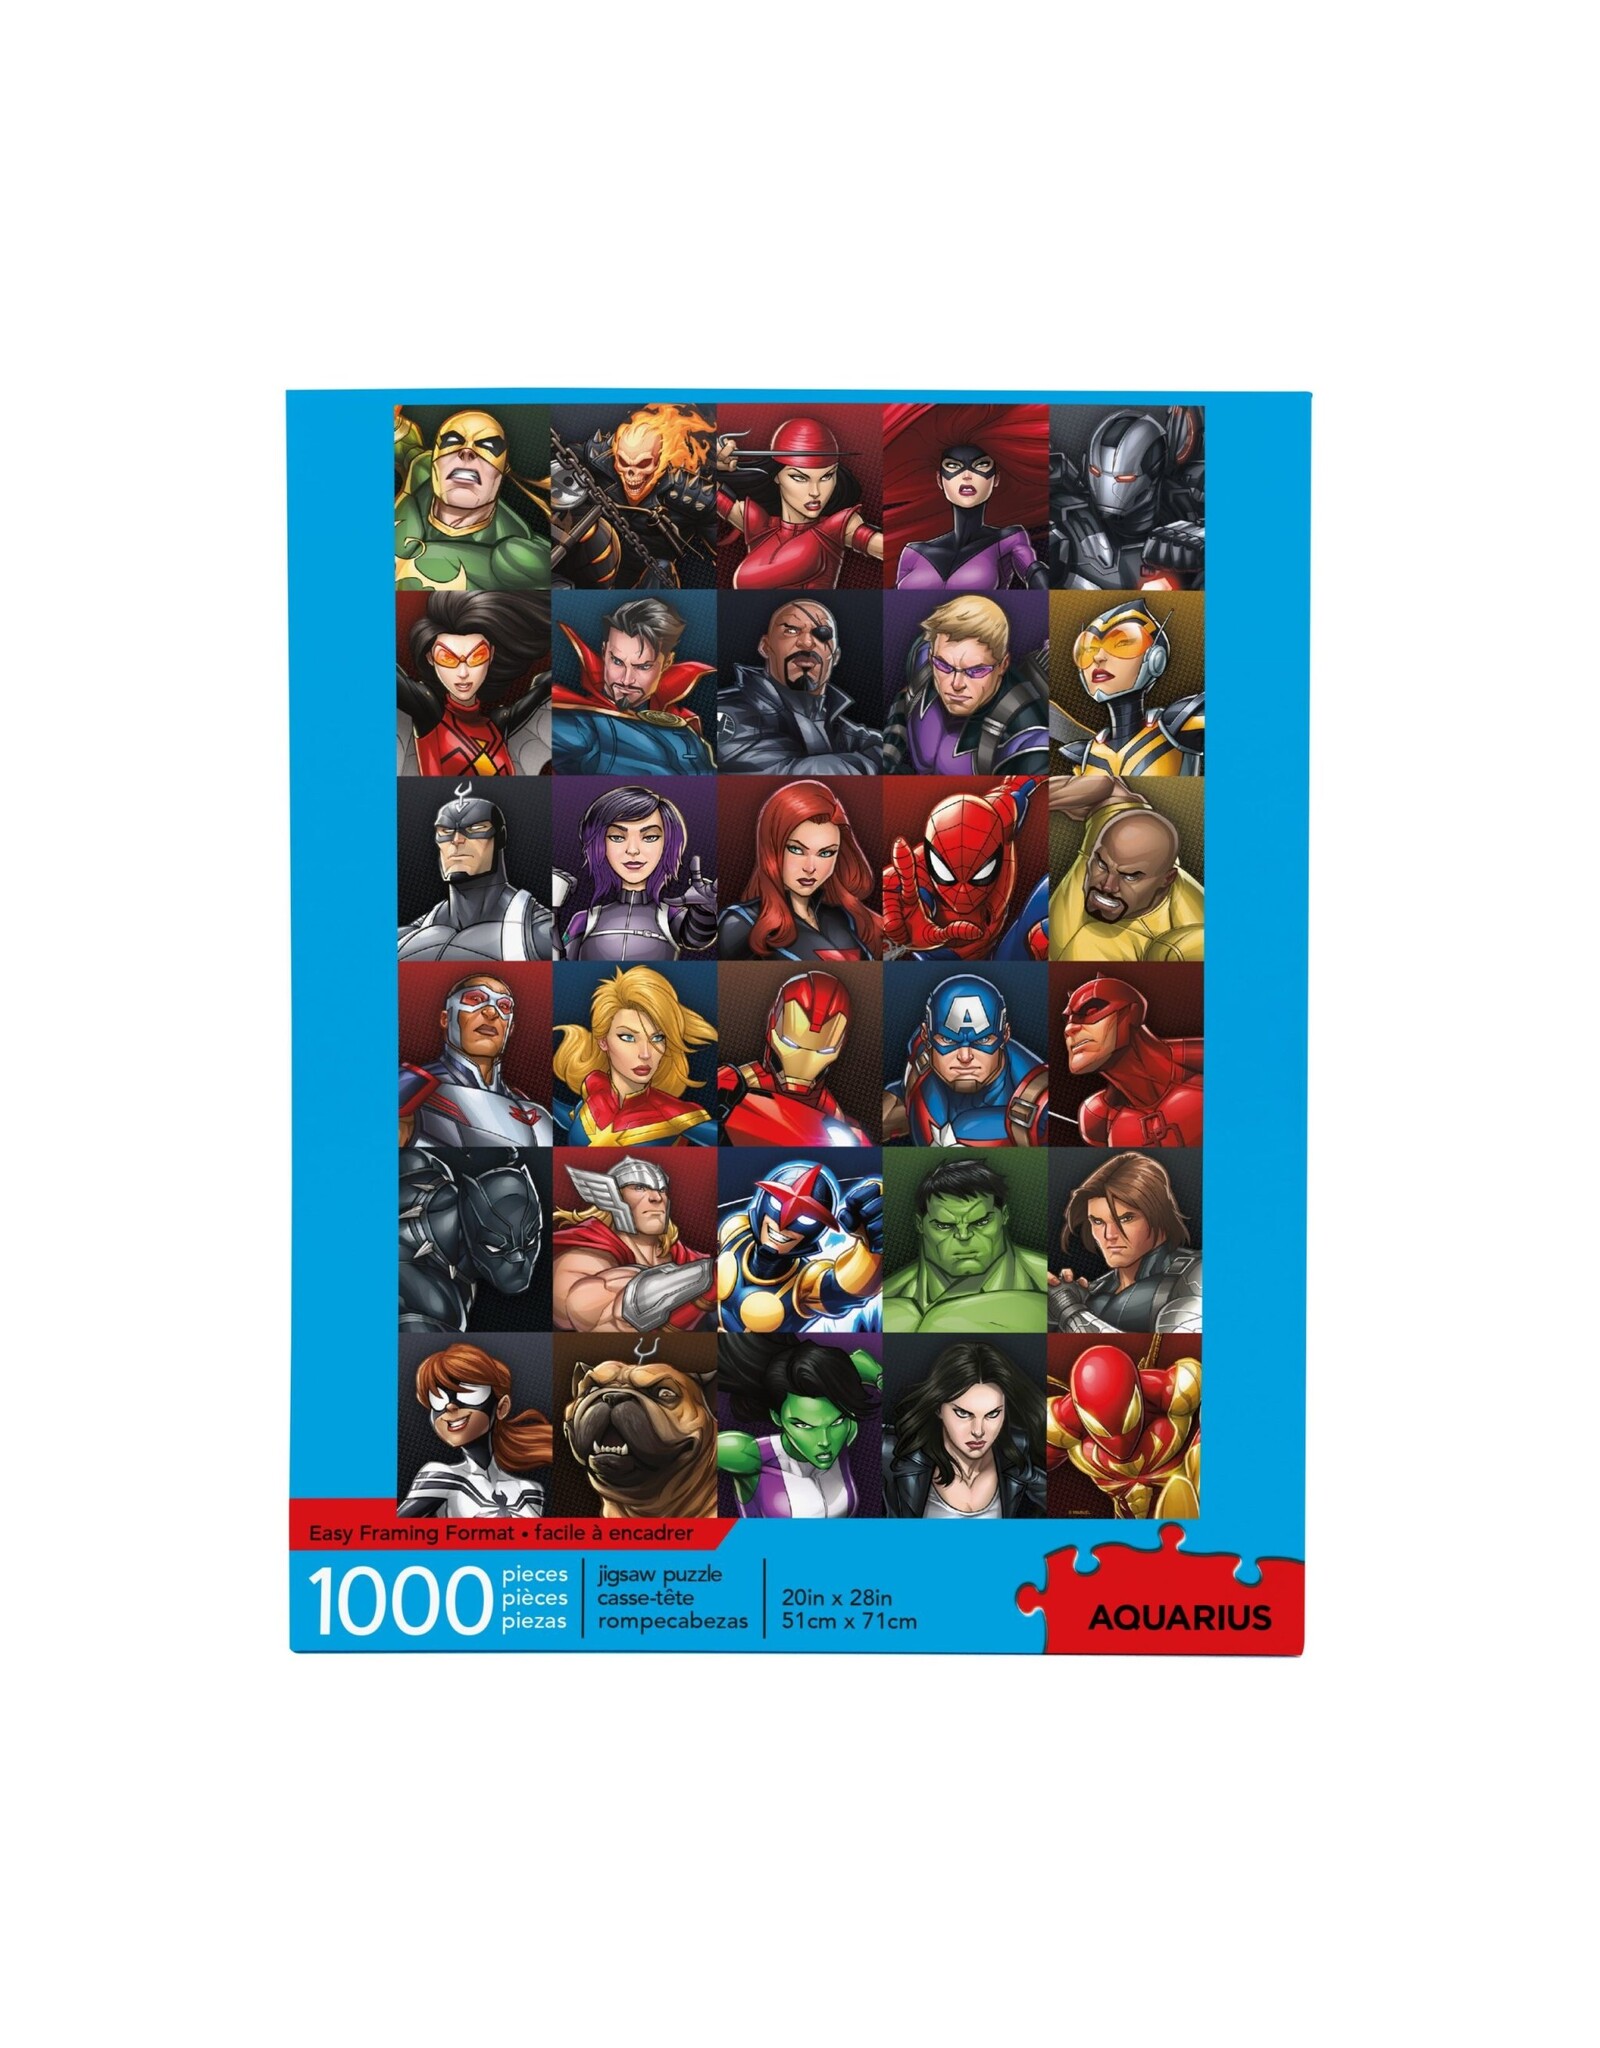 NMR Marvel Heroes Collage 1000pc